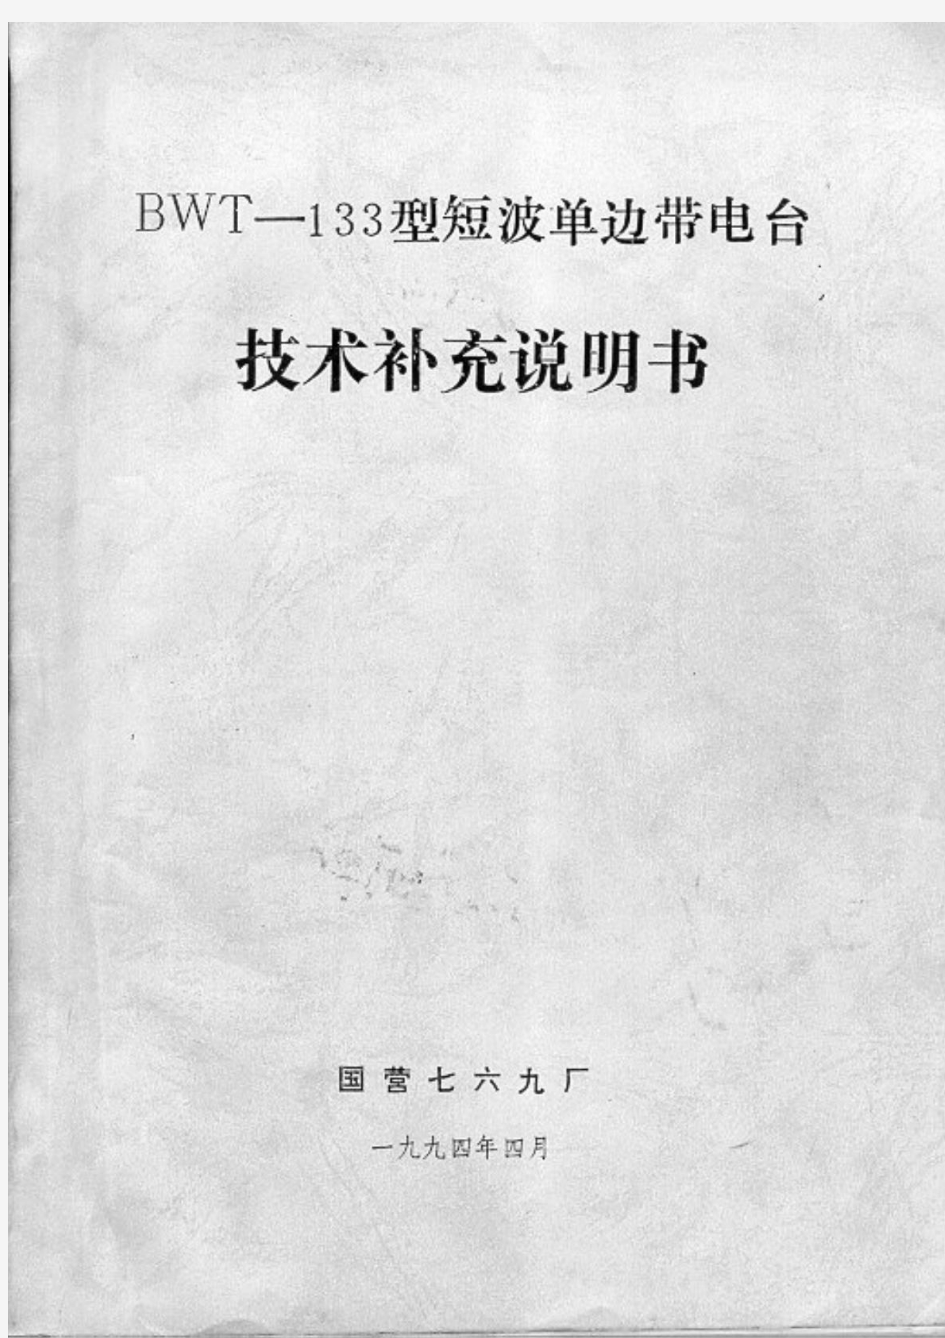 BWT-133-3型短波电台说明书